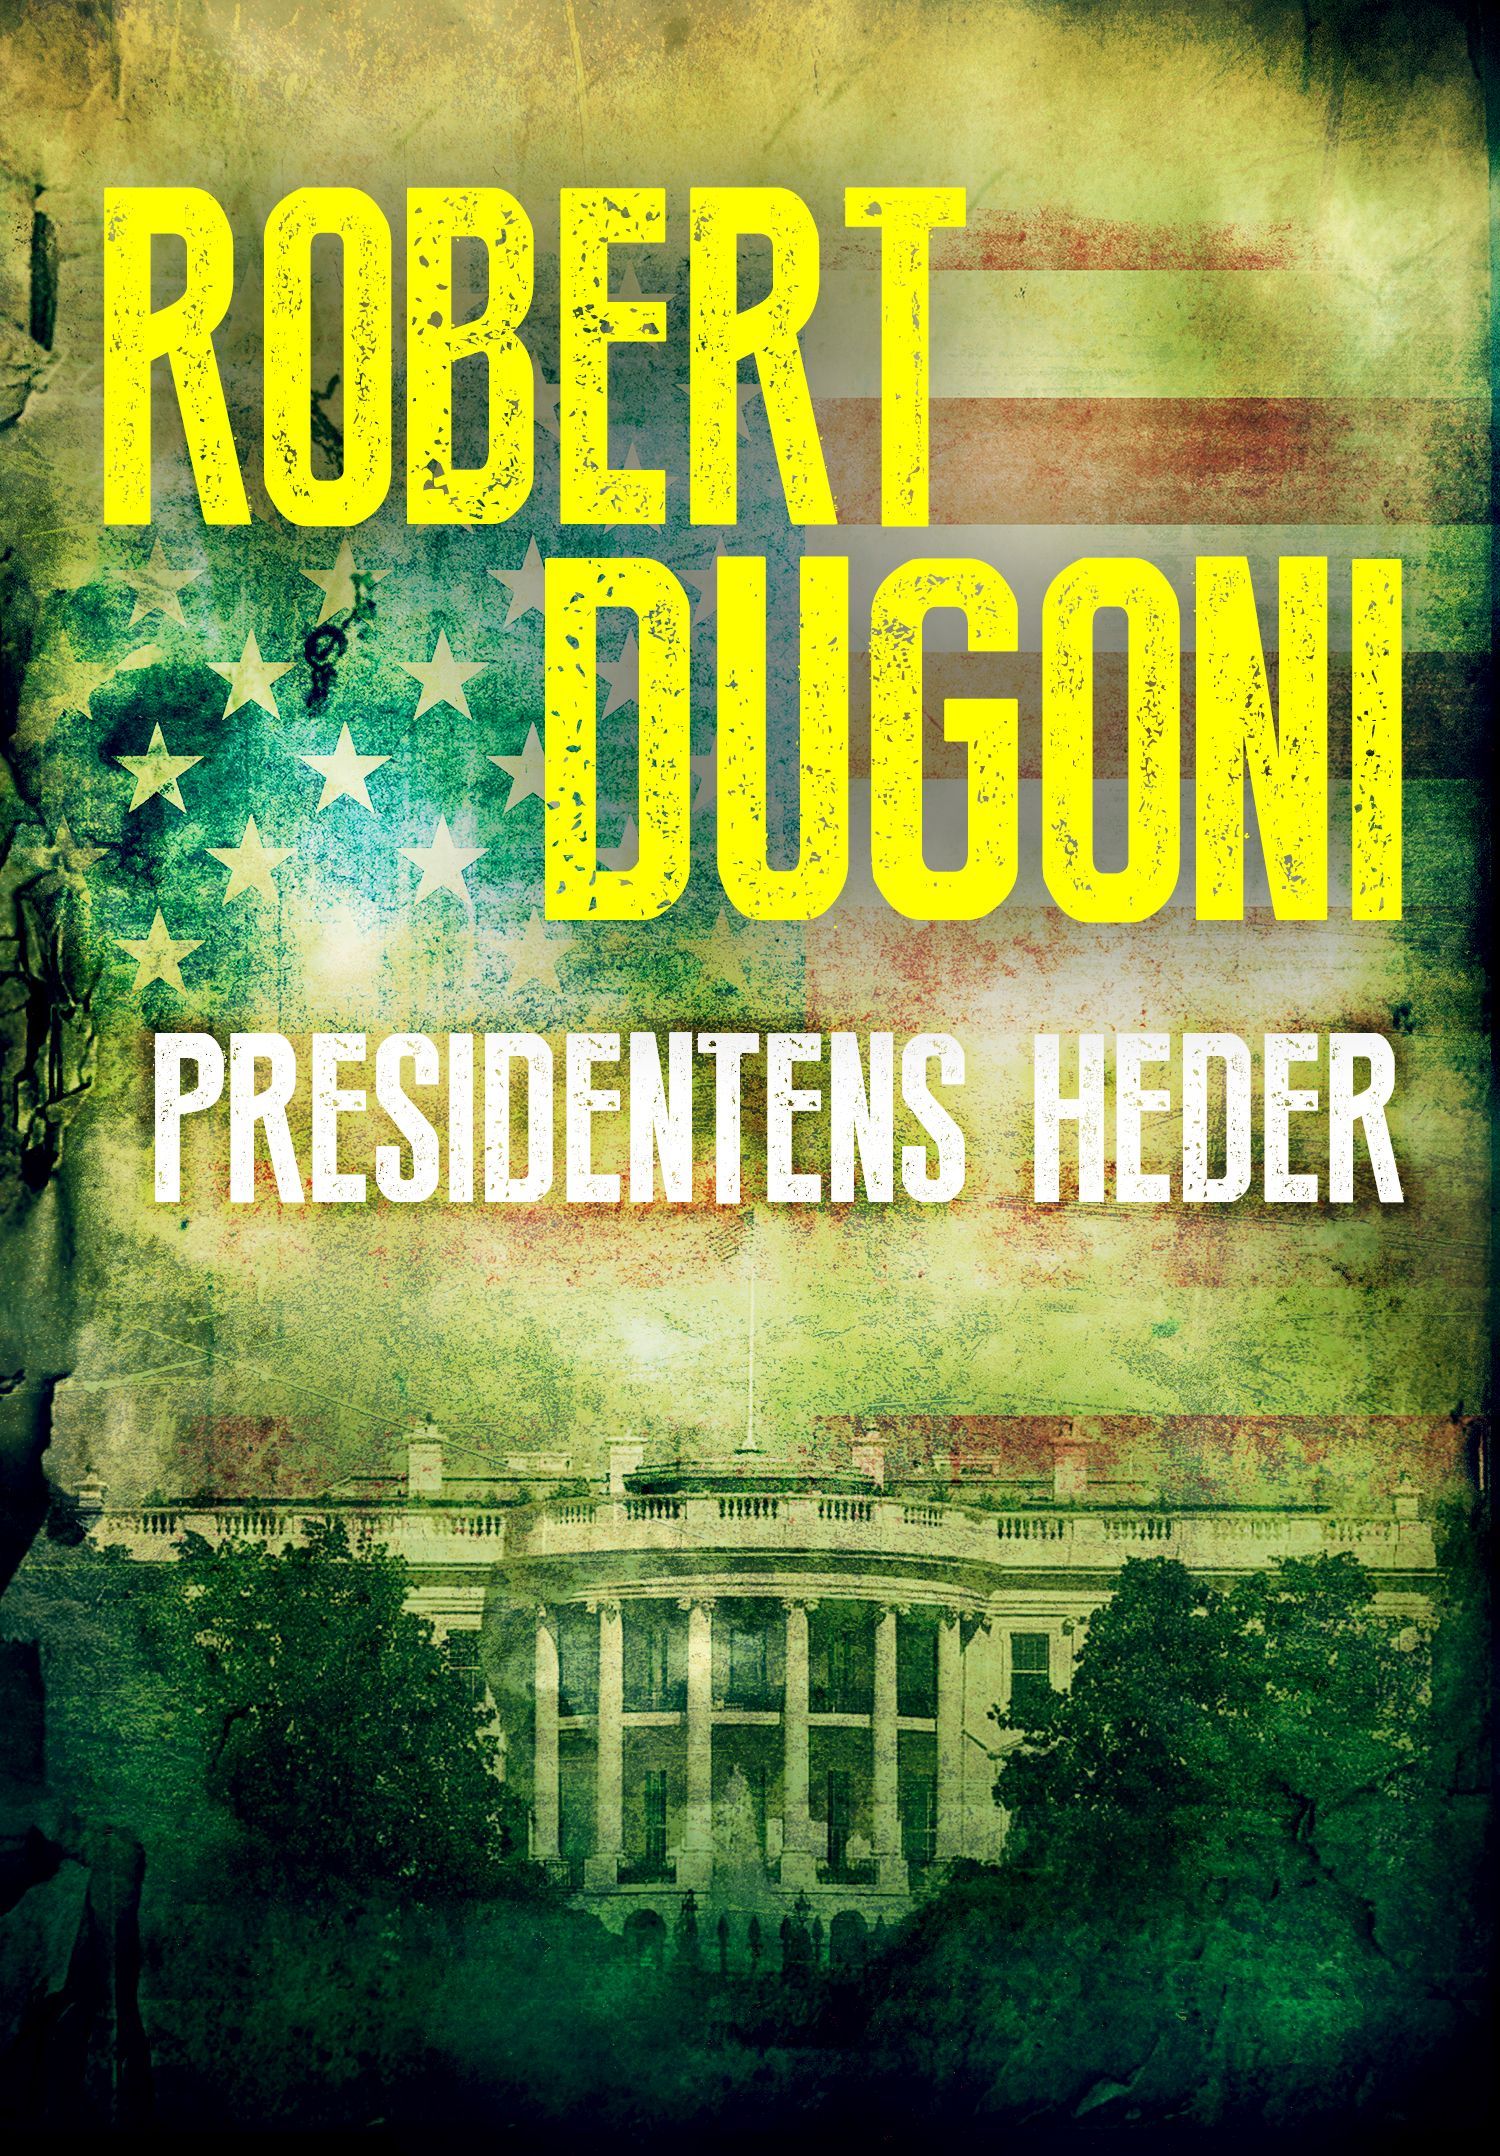 Presidentens heder, eBook by Robert Dugoni